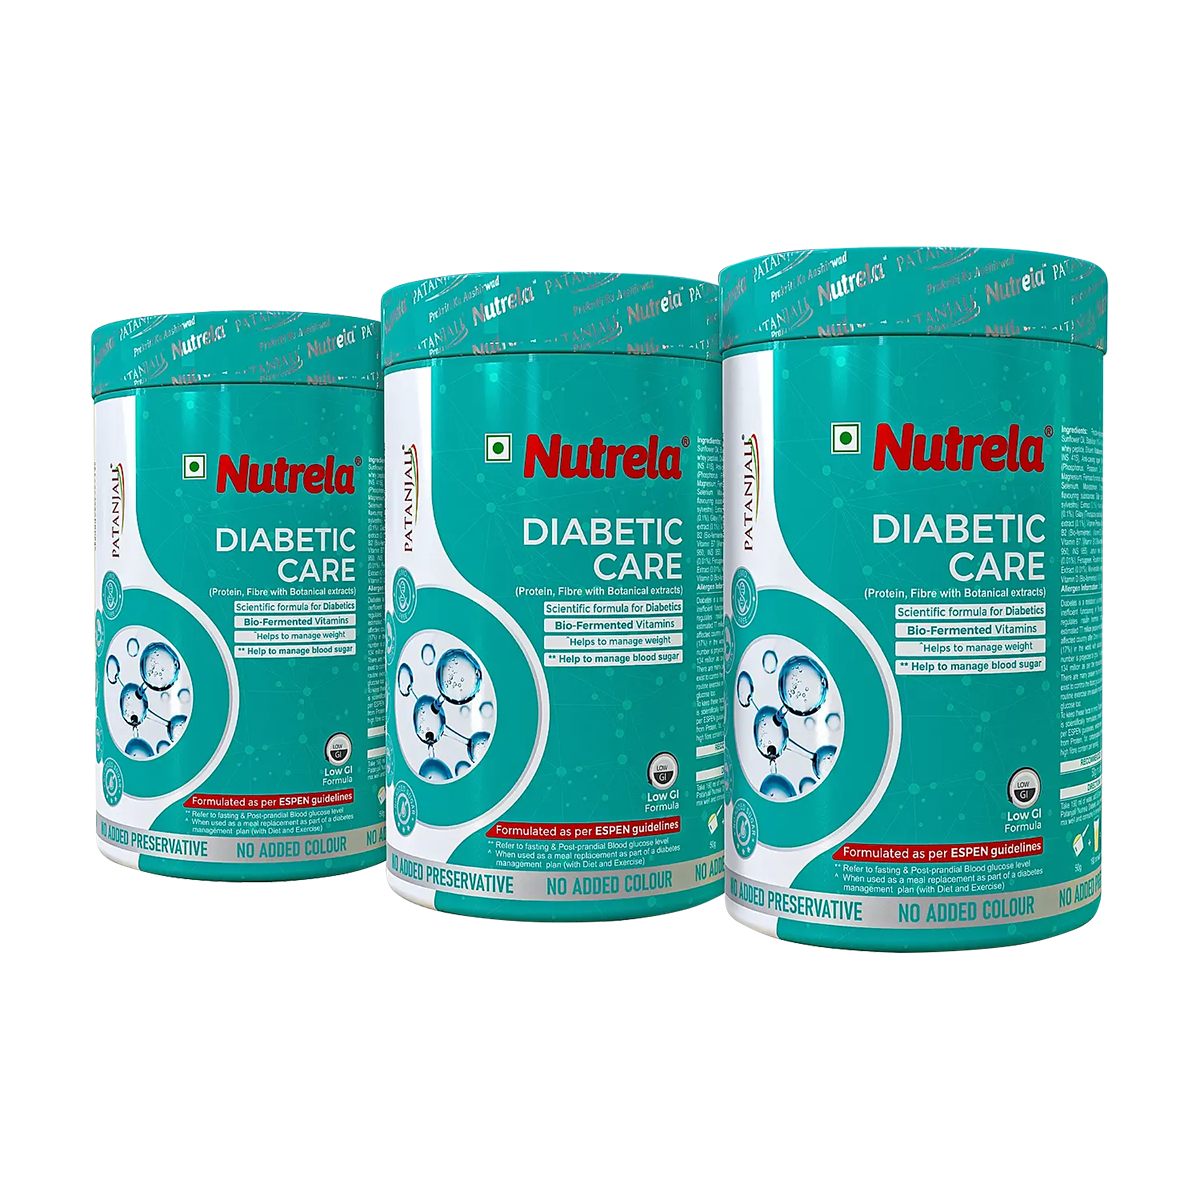 Patanjali Nutrela Diabetic Care (pack of 3)